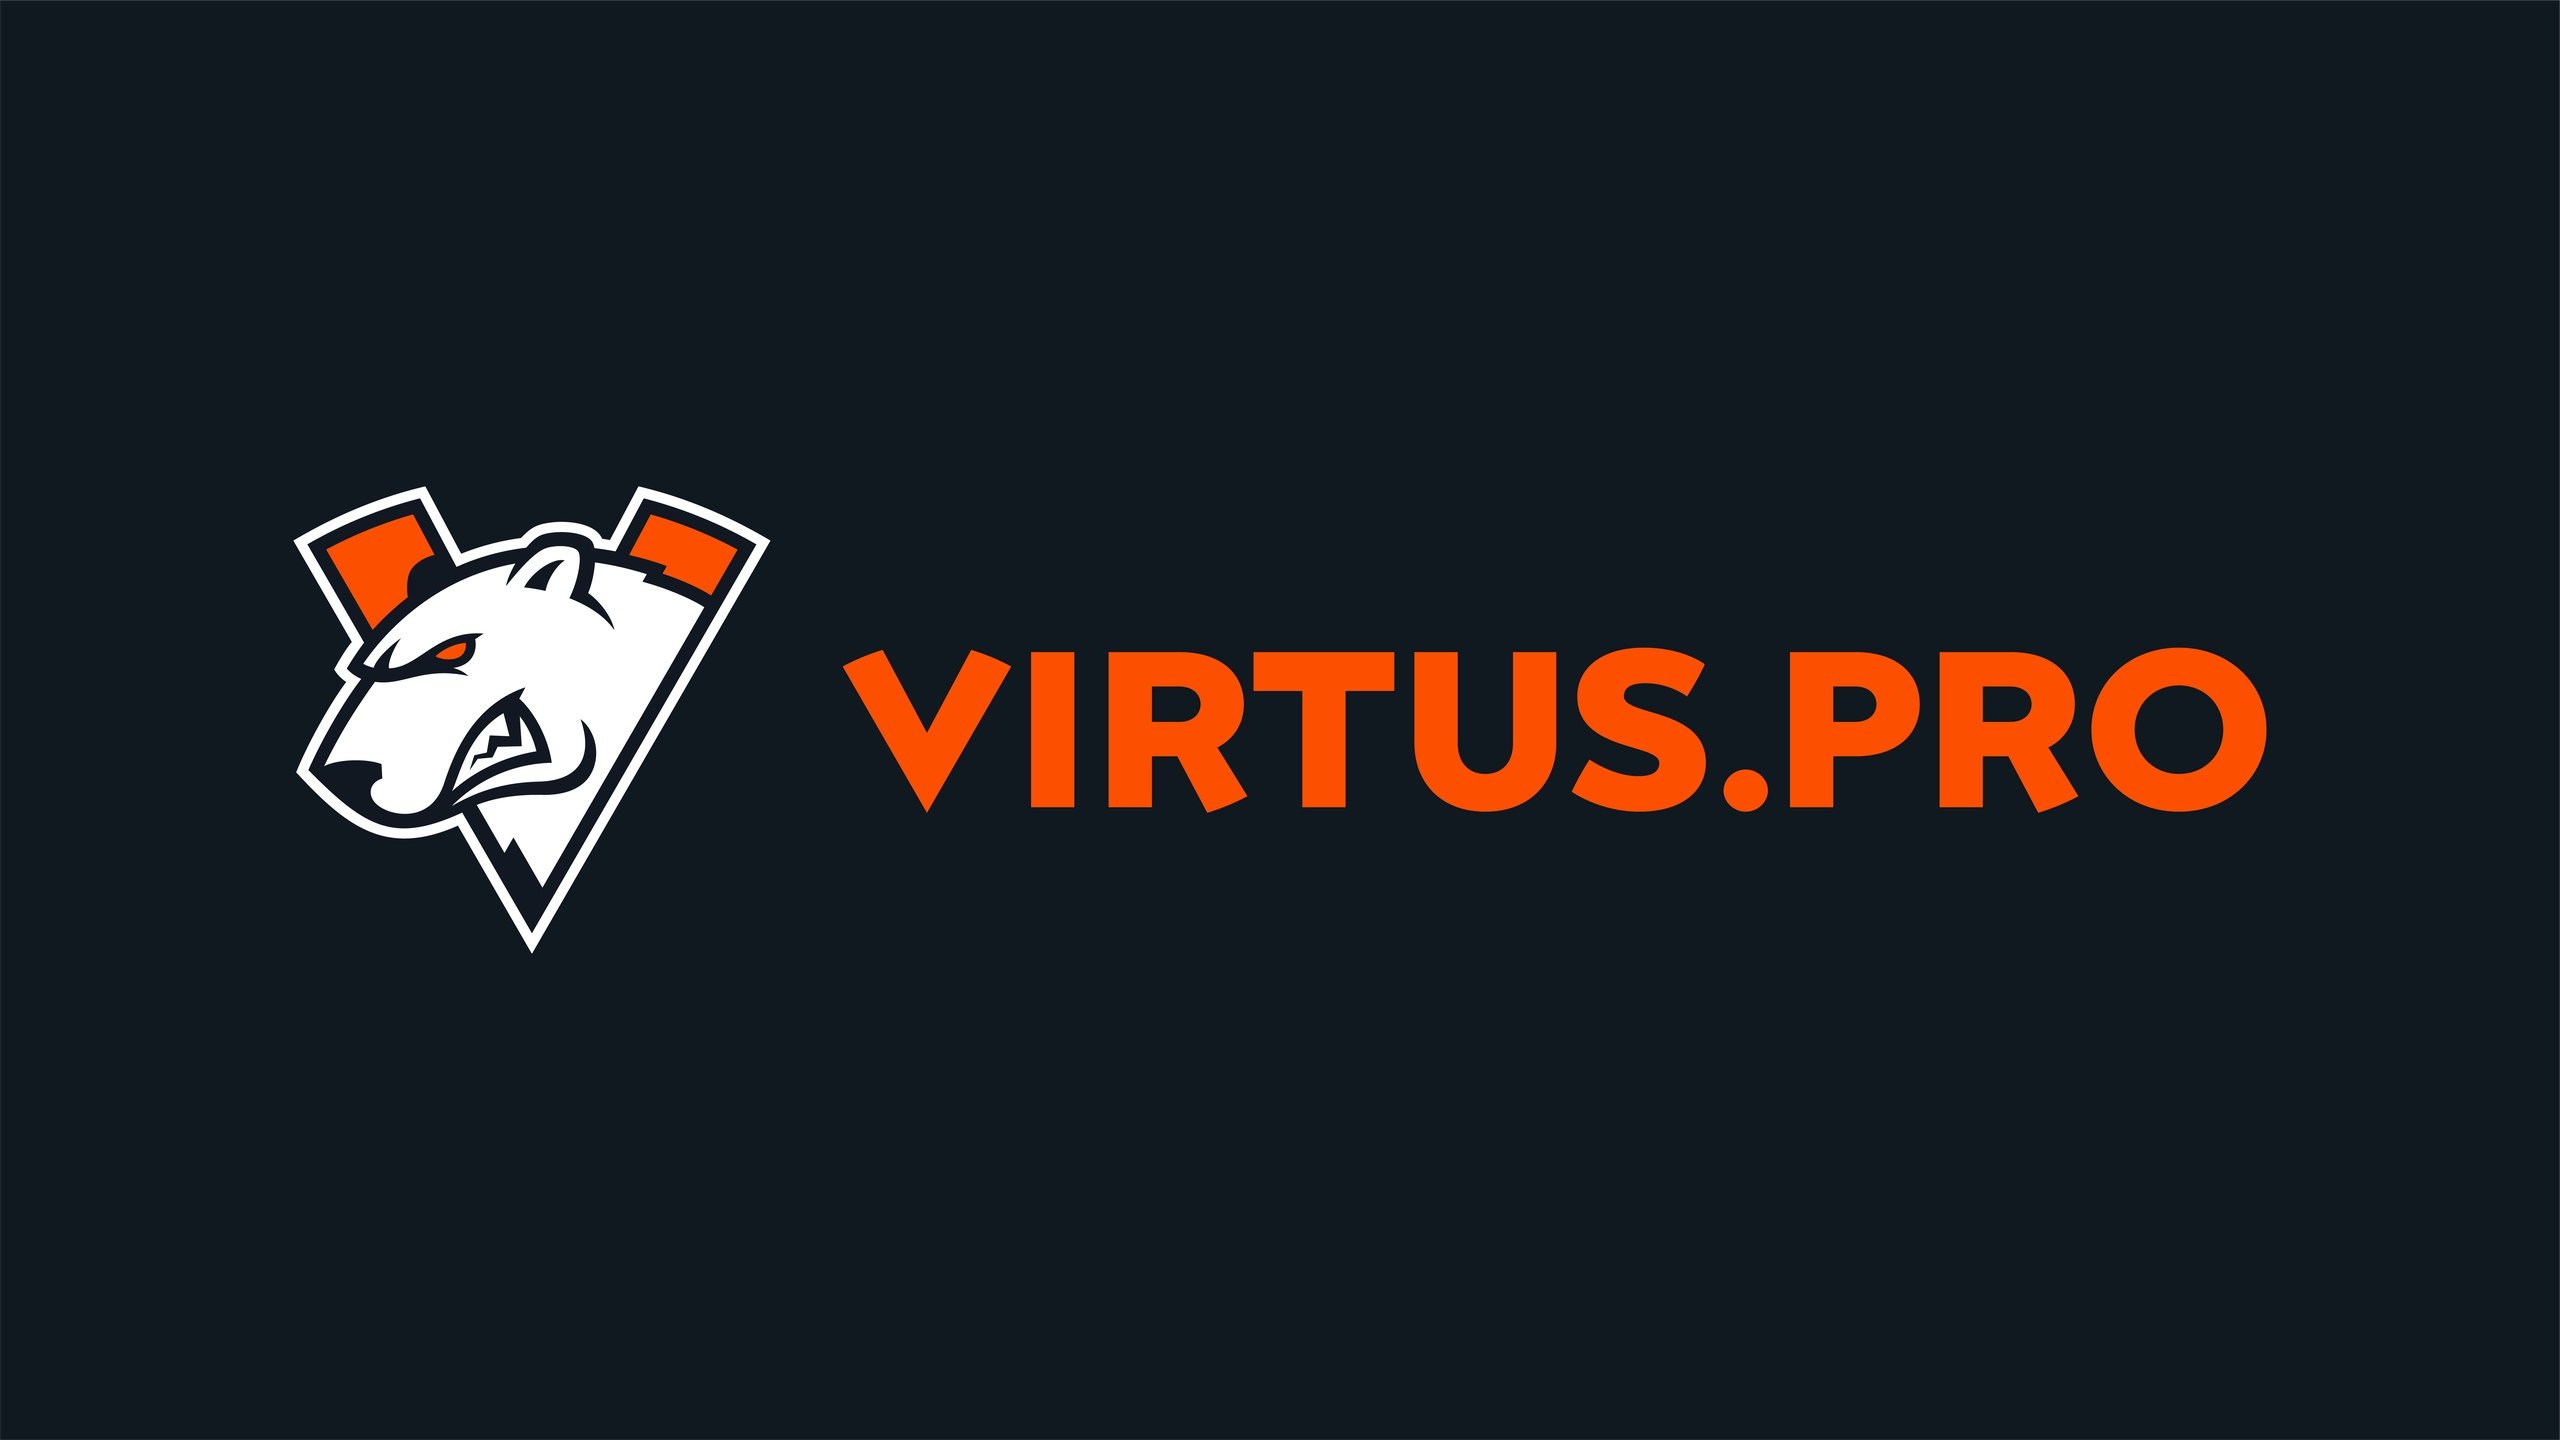 Virtus.pro опубликовала тизер, фанаты увидели намёк на анонс ростера по Dota 2